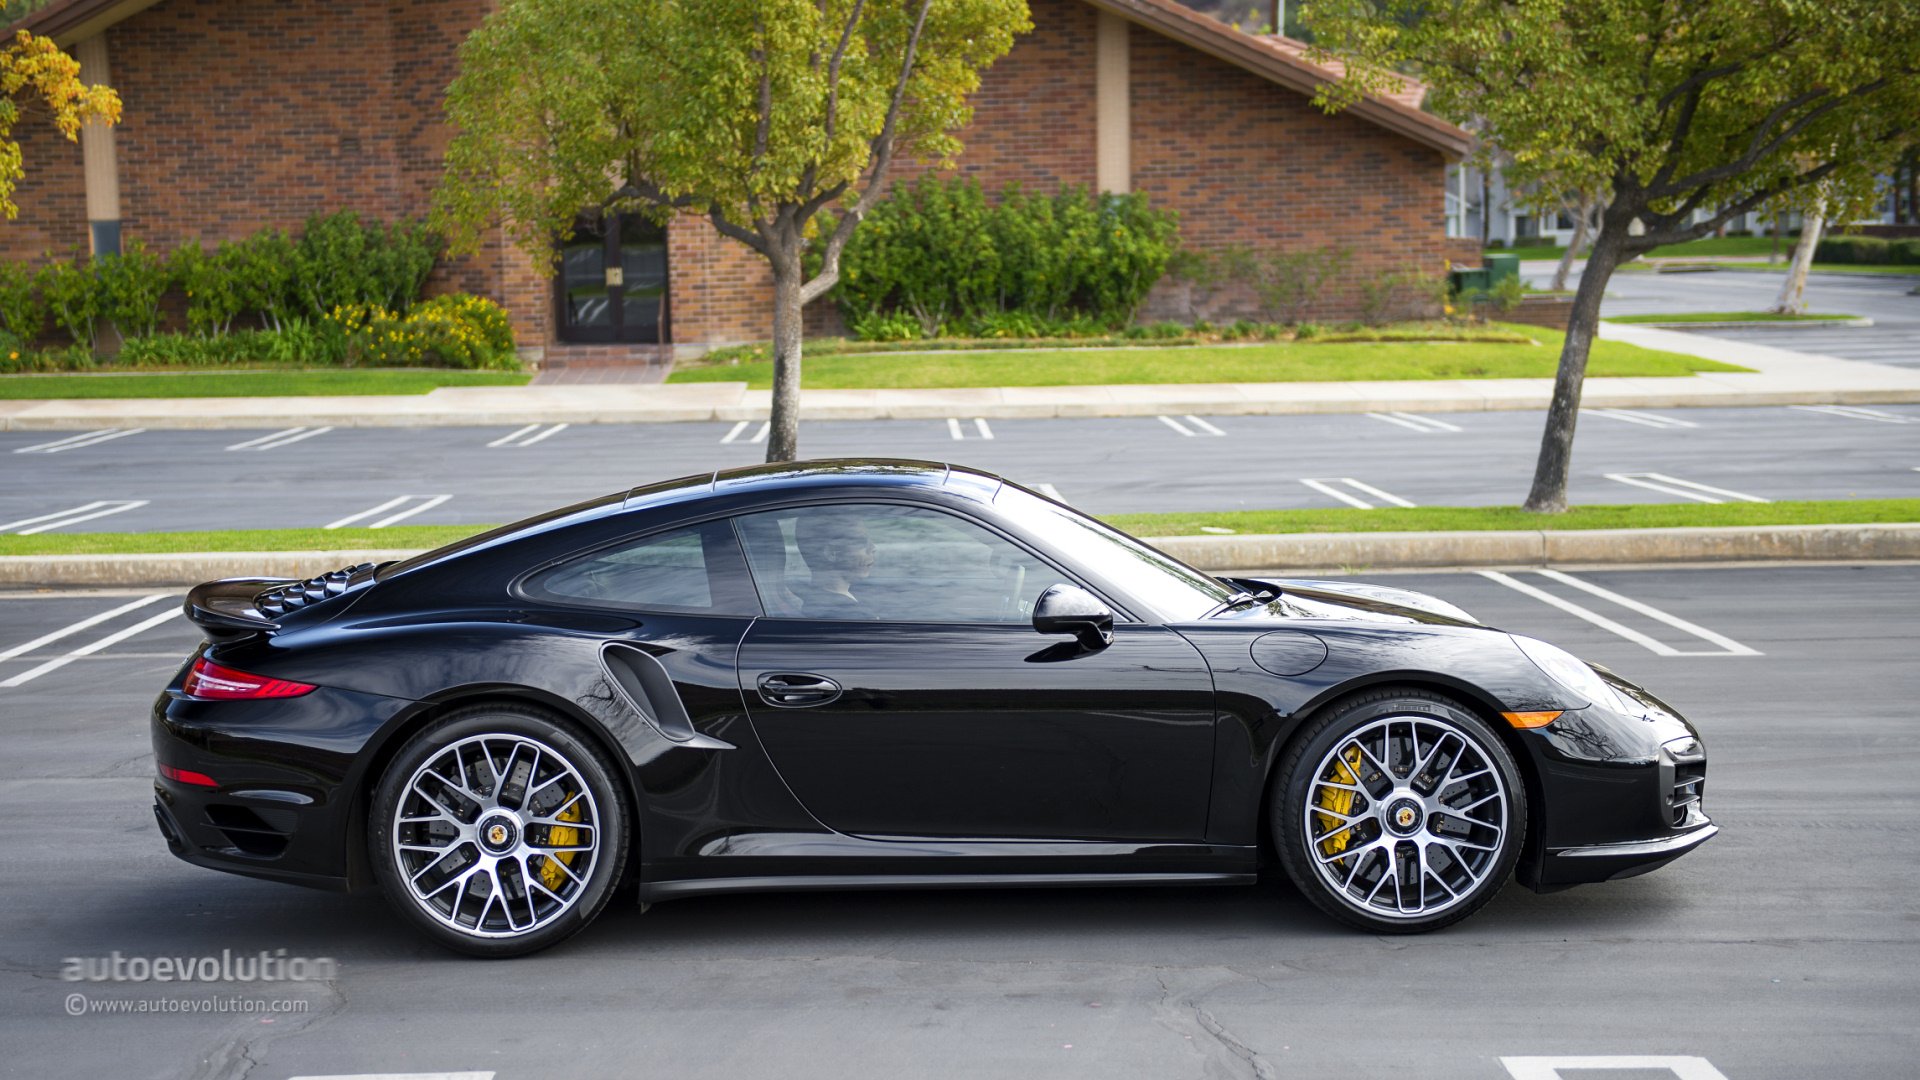 2014, Porsche, 911, 991, Turbo s, Coupe, Cars Wallpaper